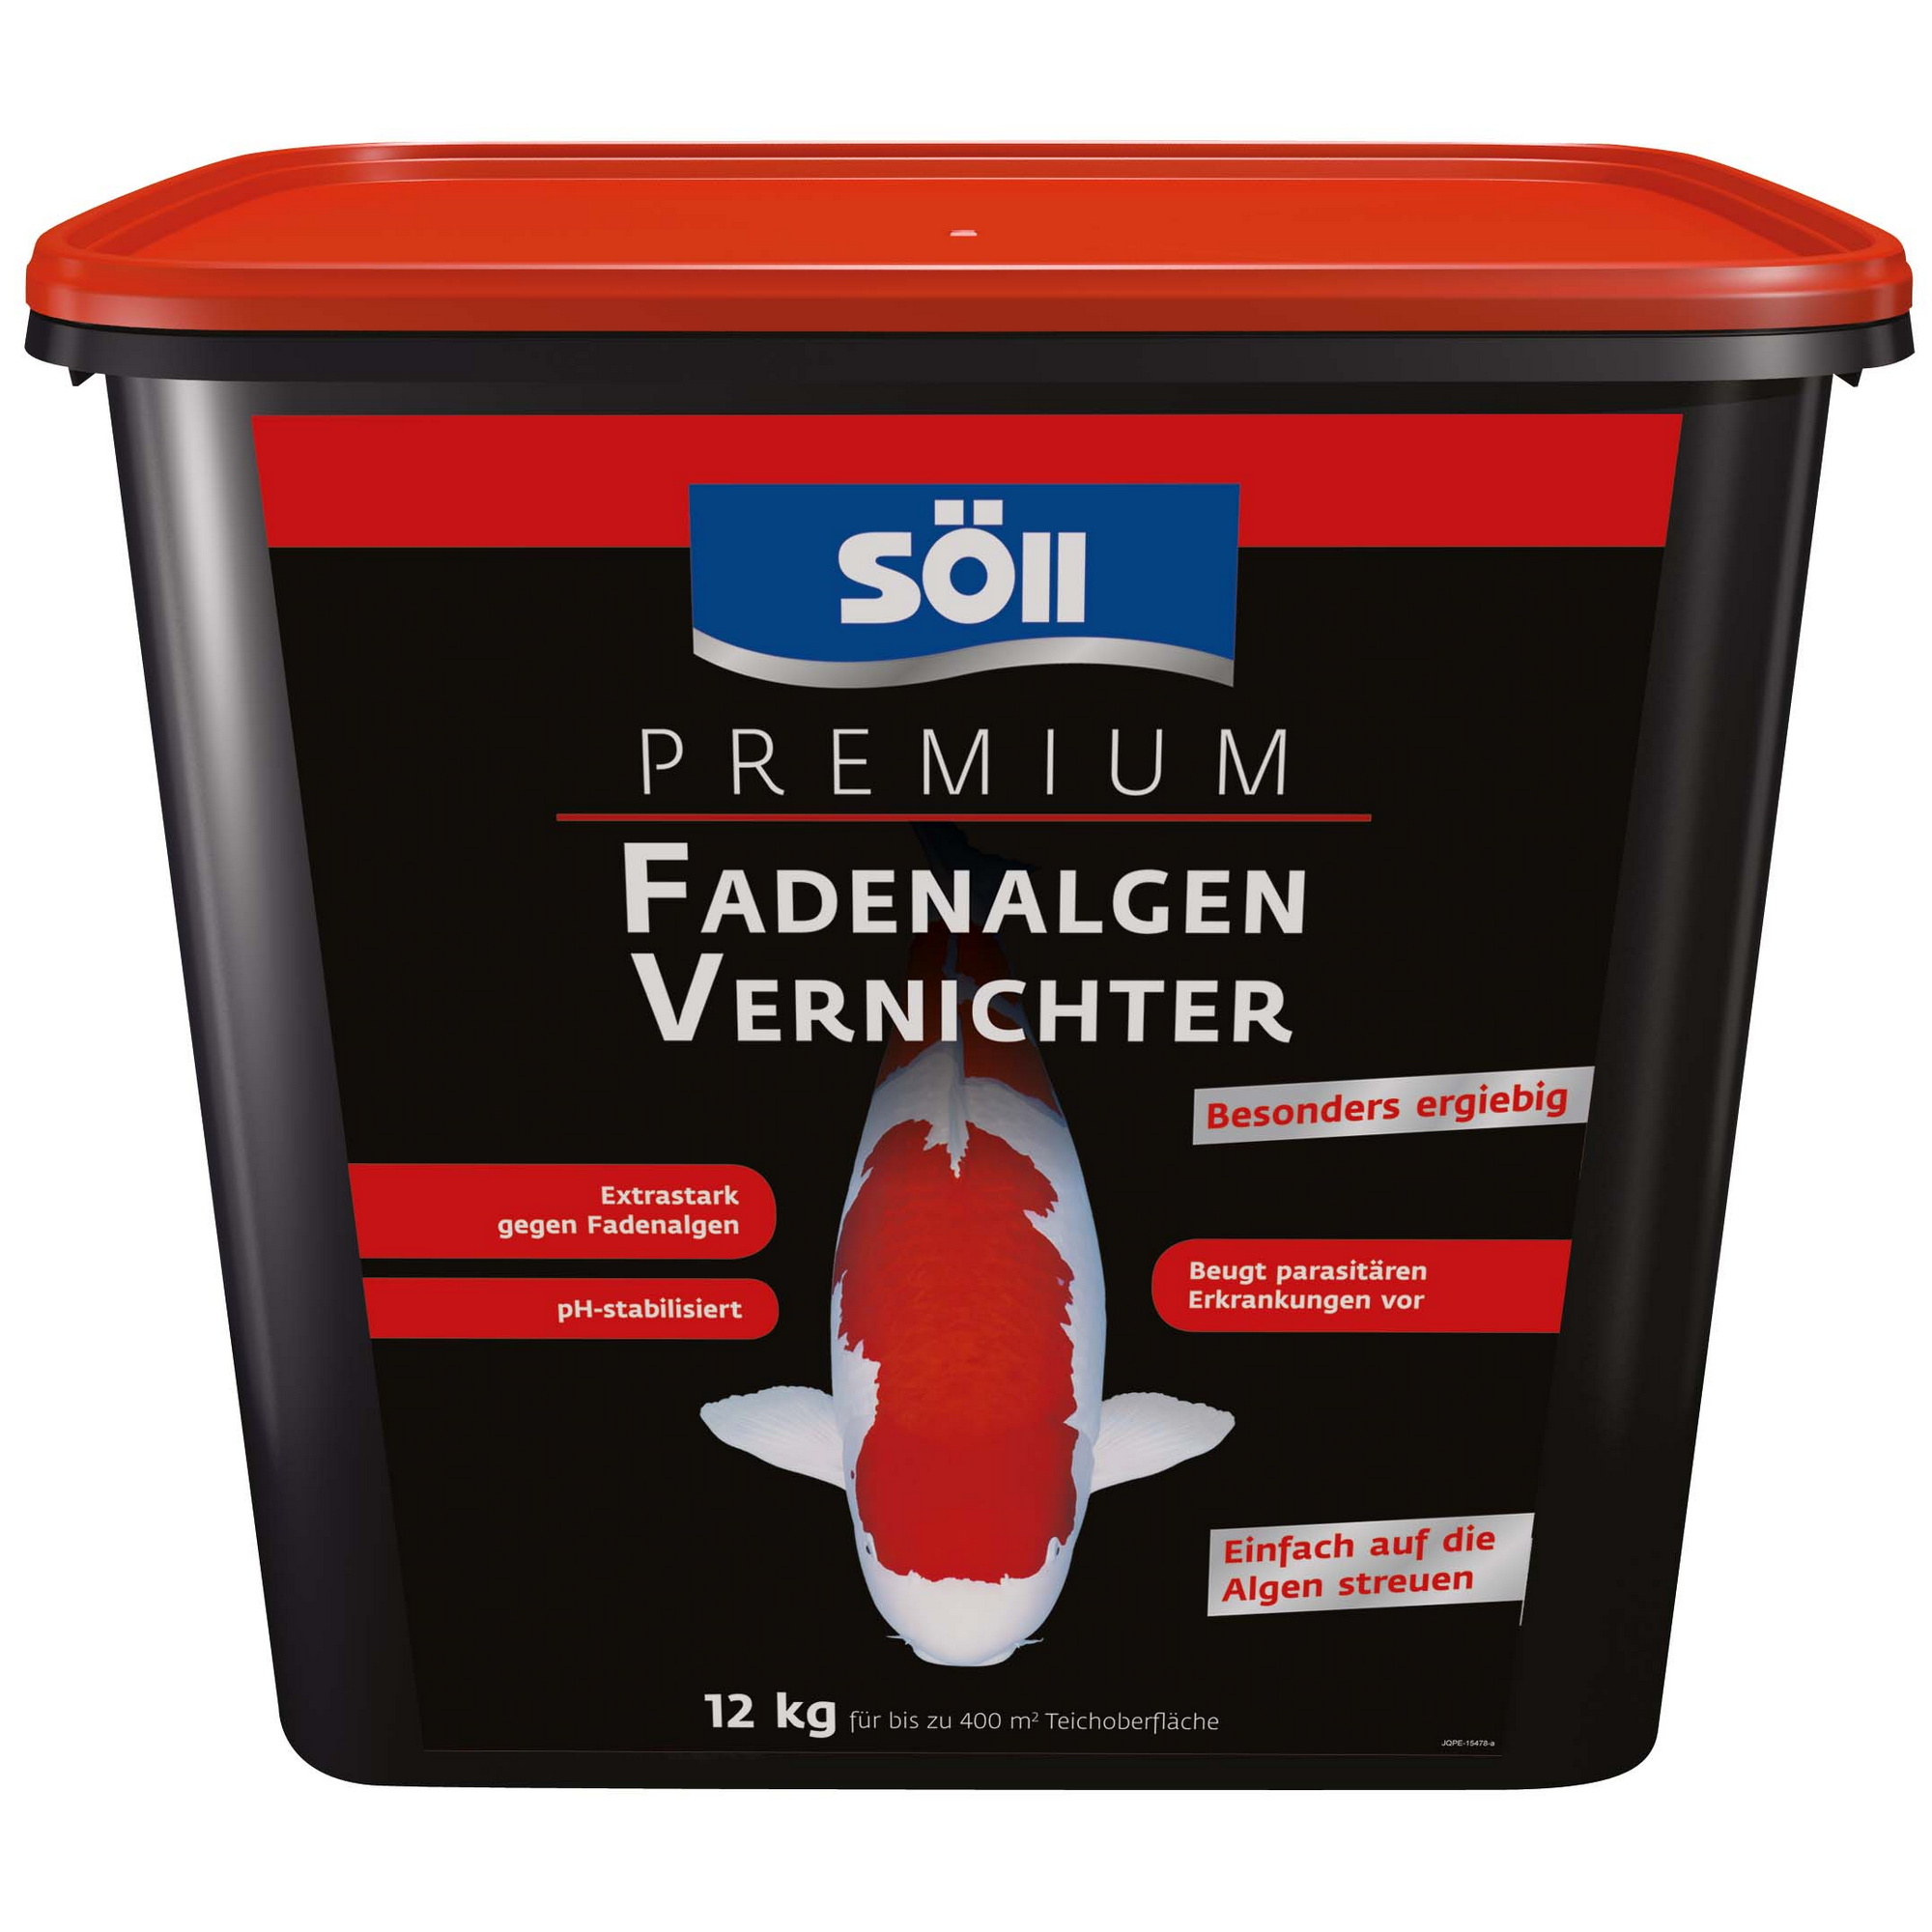 Premium Fadenalgen-Vernichter 12 kg + product picture